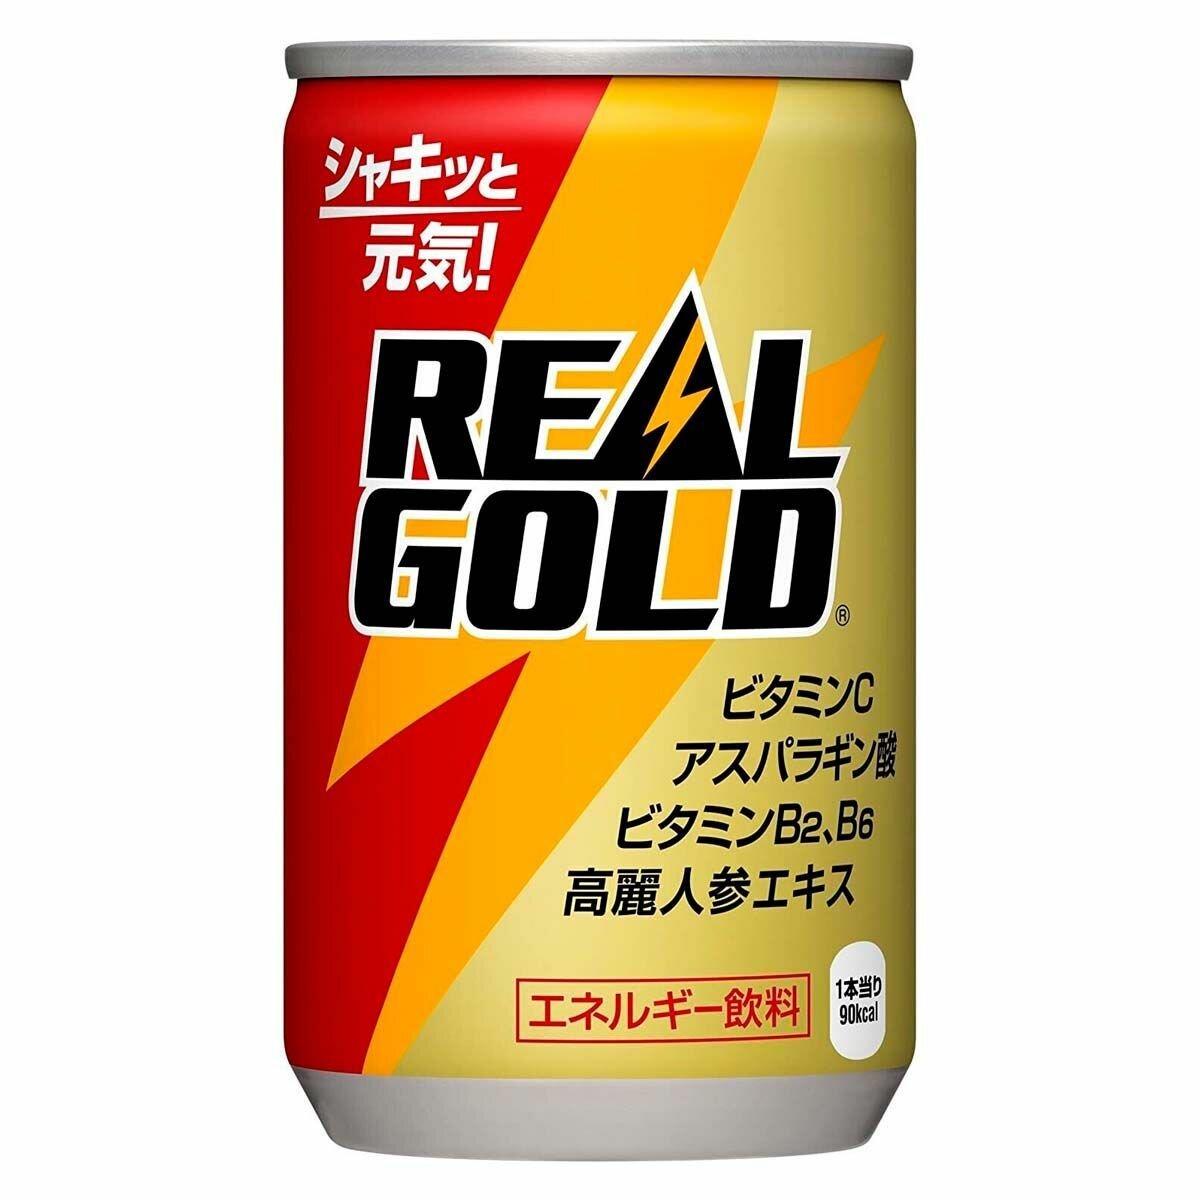 Энергетический напиток Coca-Cola Real Gold с витаминами (Япония), 190 мл